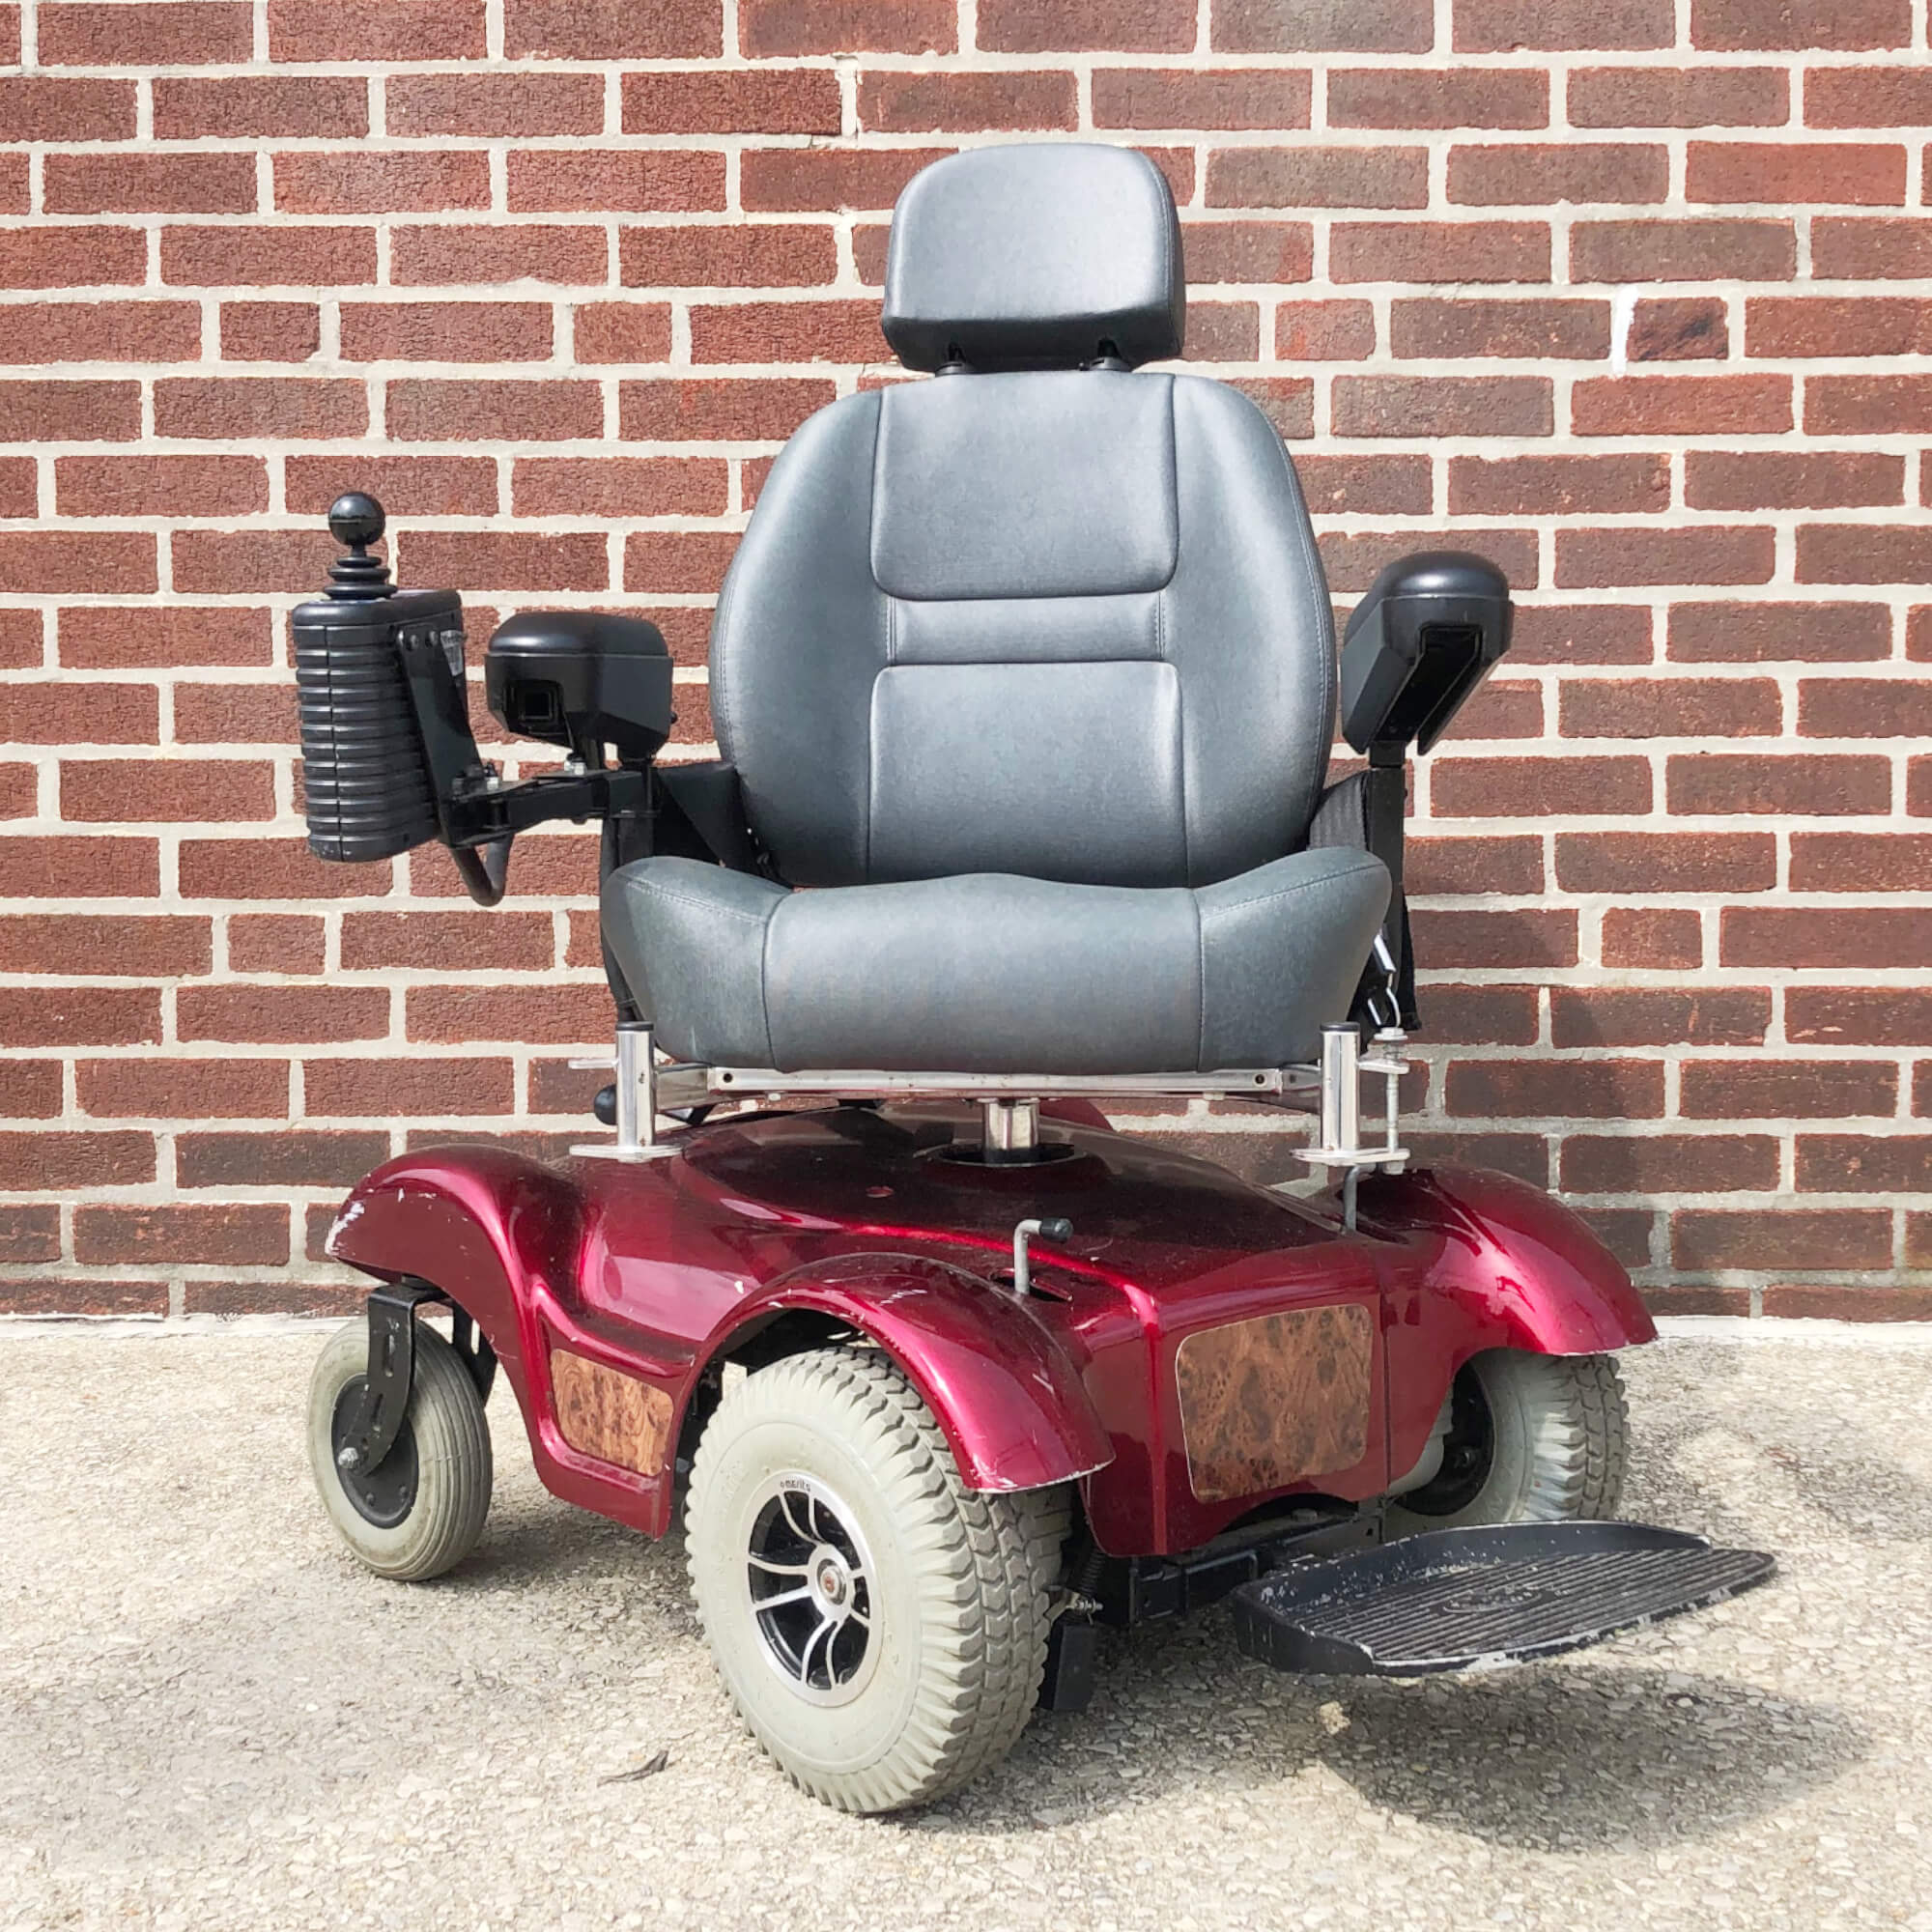 Rascal Power Wheelchair in red - three quarter view